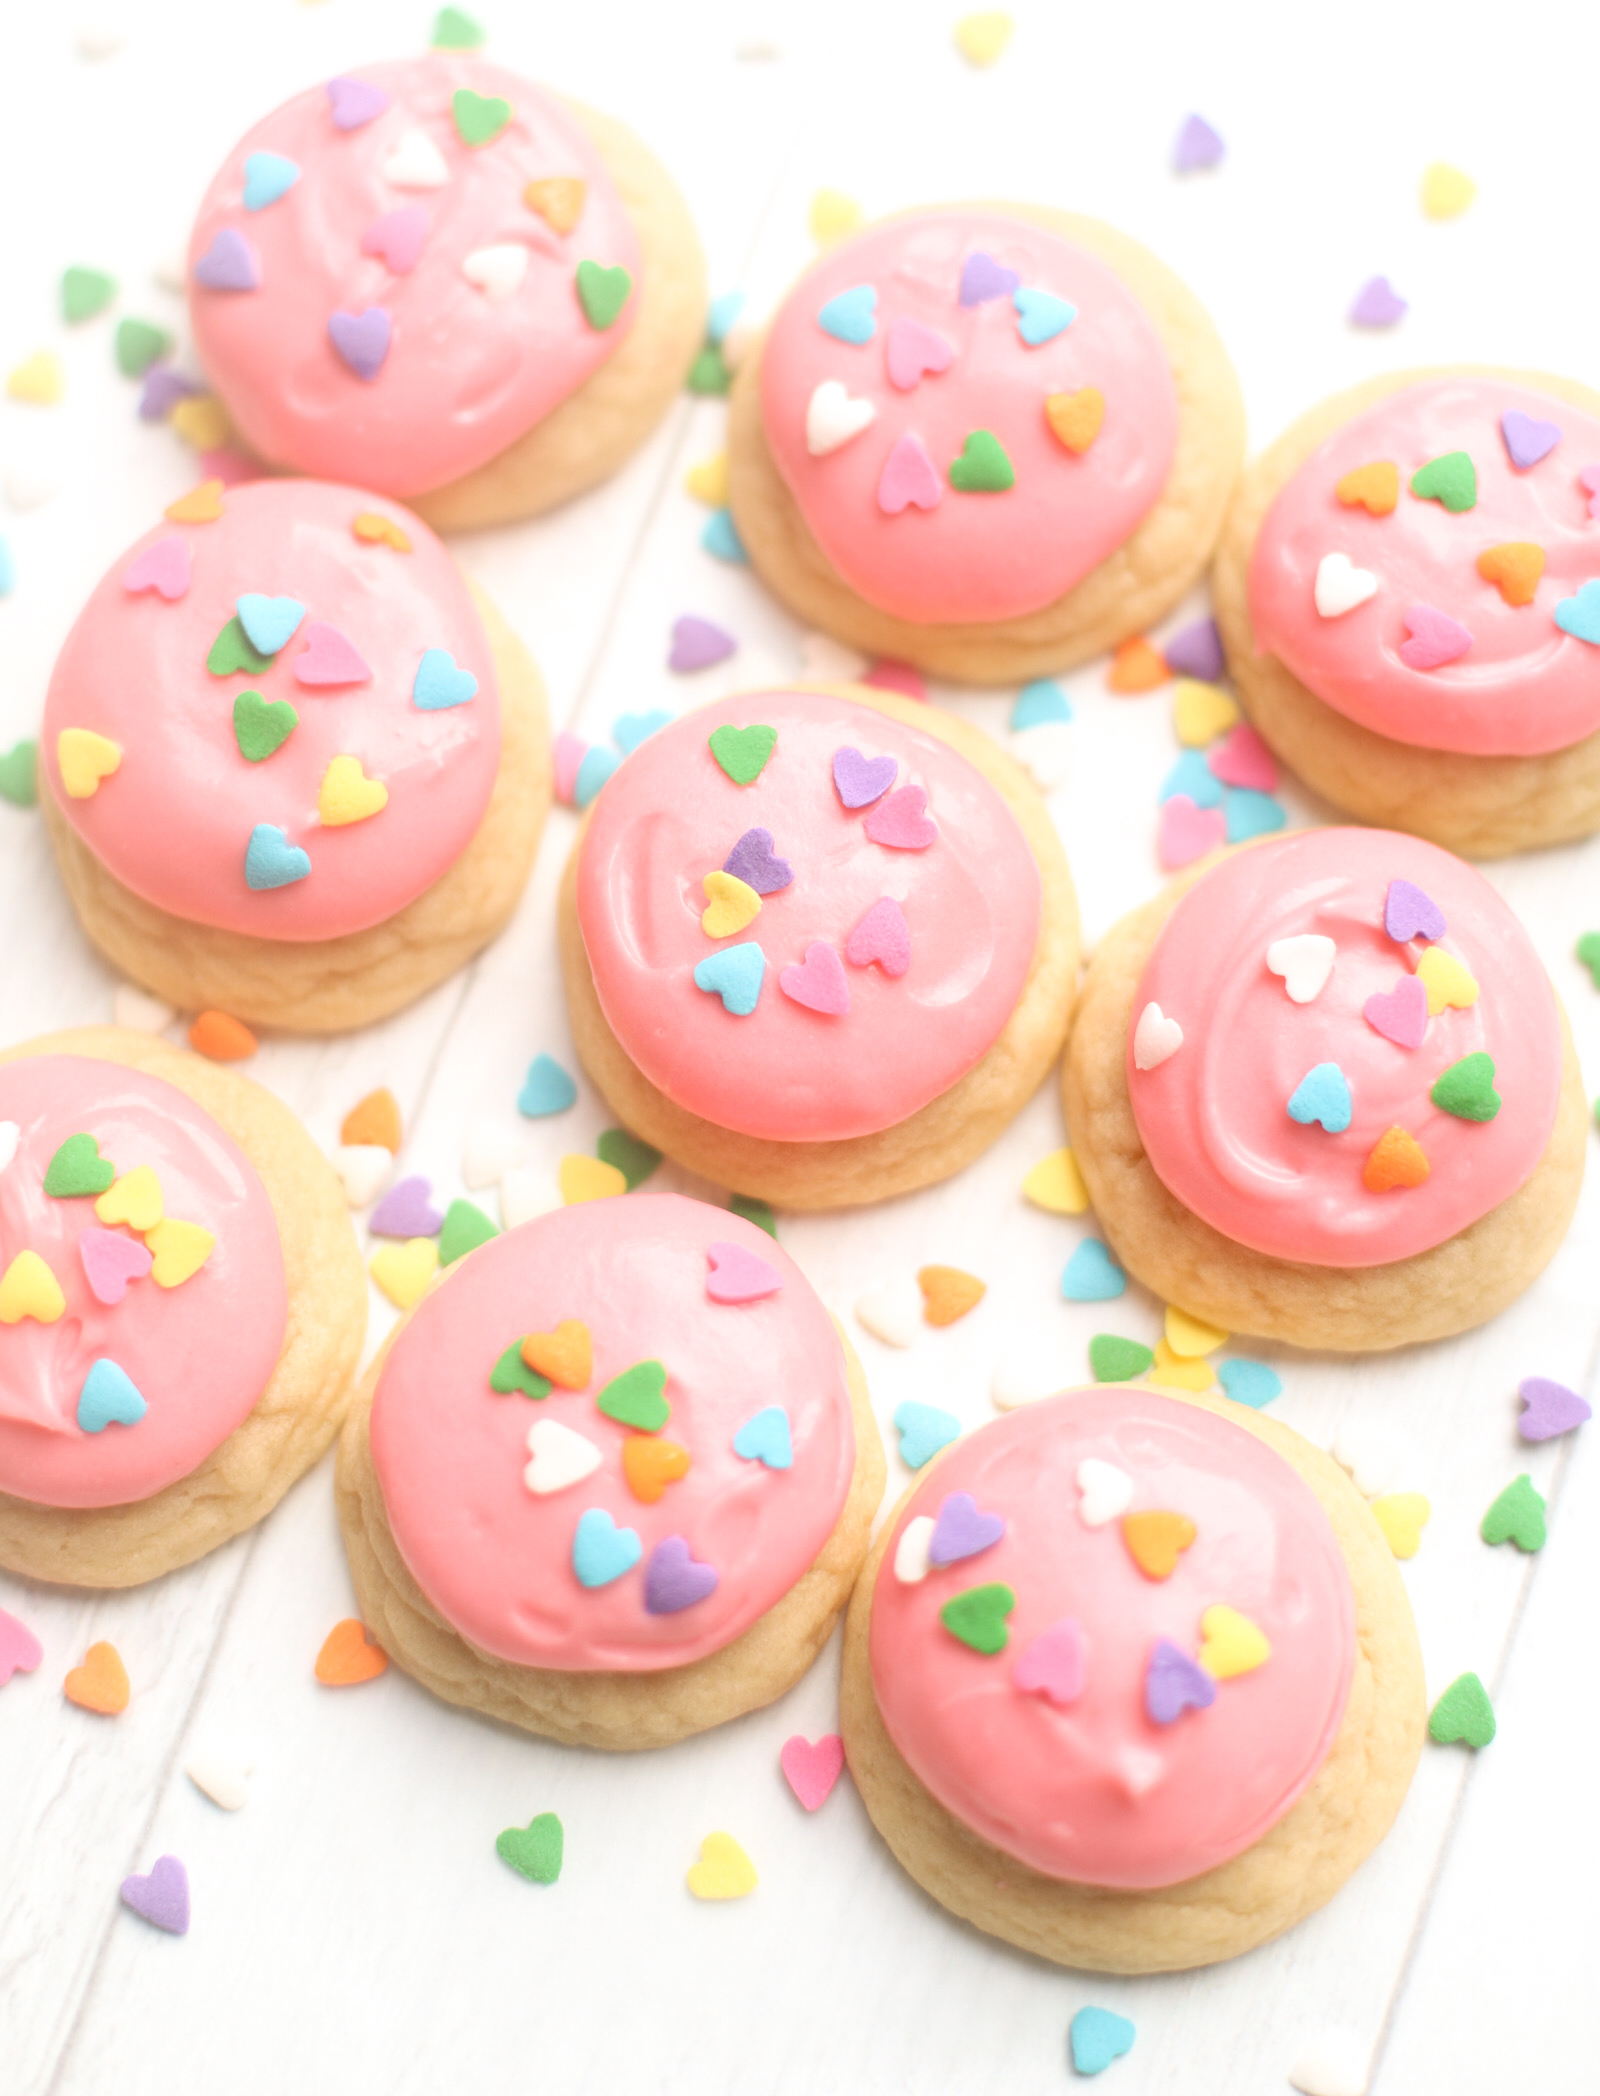 Dairy Free Lofthouse Cookies - Pillowy Soft Frosted Sugar Cookies Recipe | @glitterinclexi | GLITTERINC.COM